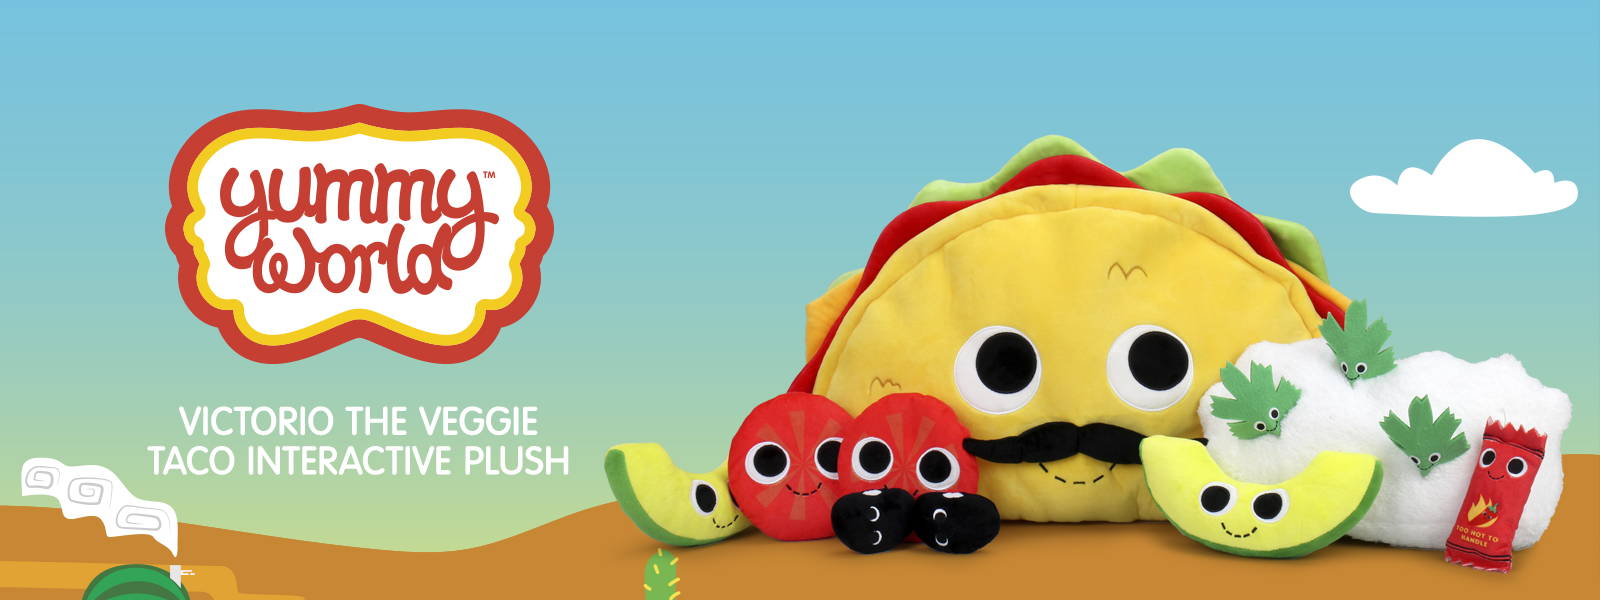 Kidrobot Yummy World Veggie Taco Interactive Plush Toy Stuffed Animal